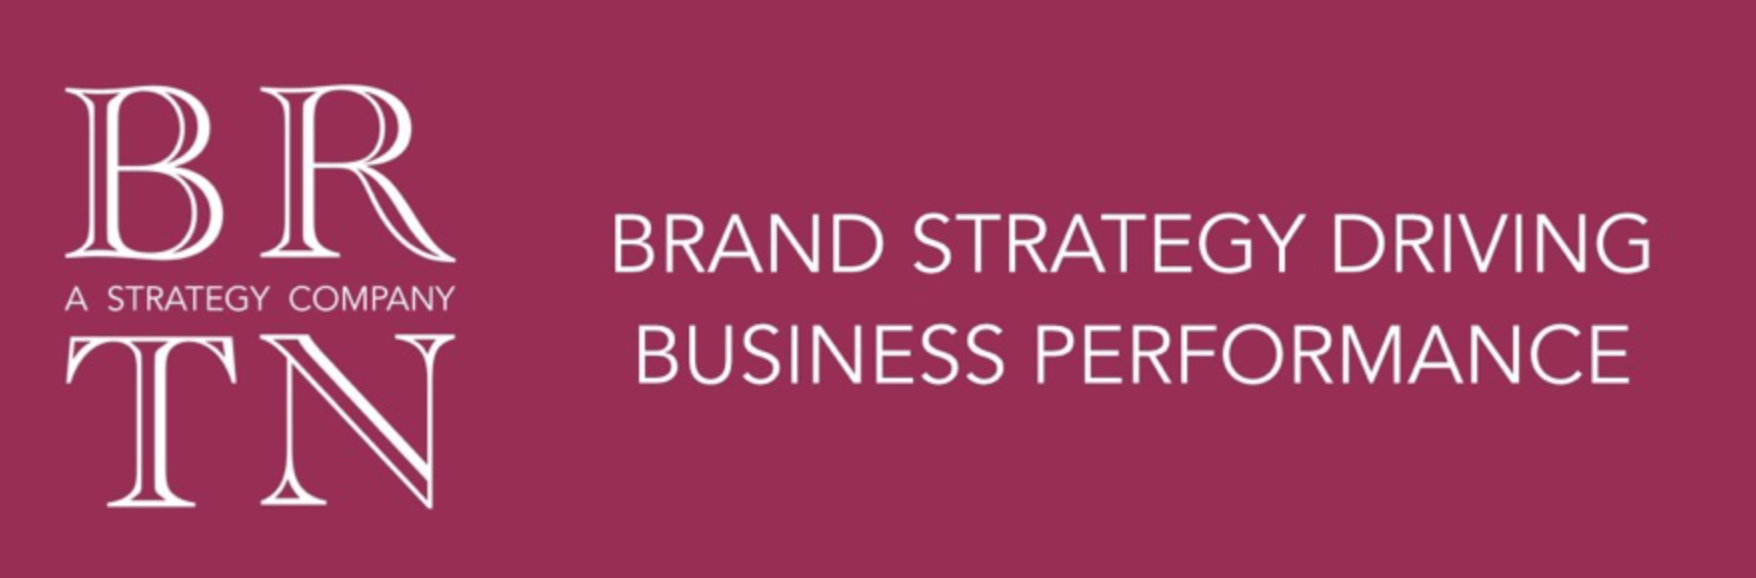 BRTN Brand Strategy